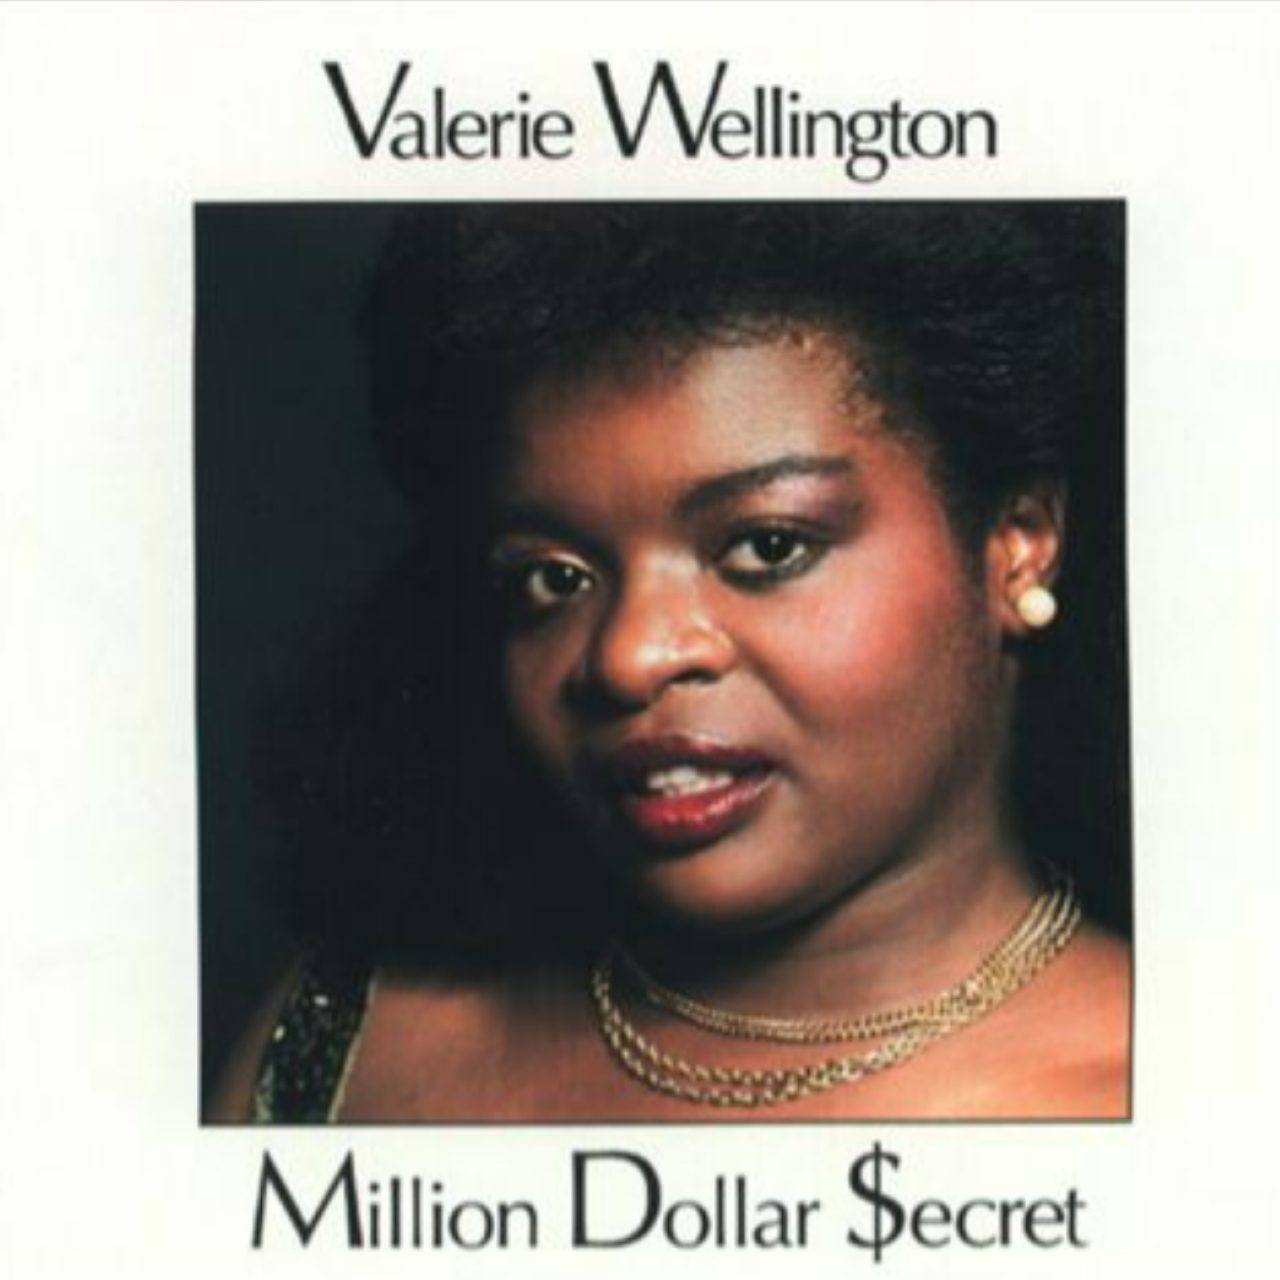 Valerie Wellington – Million Dollar Secret cover album